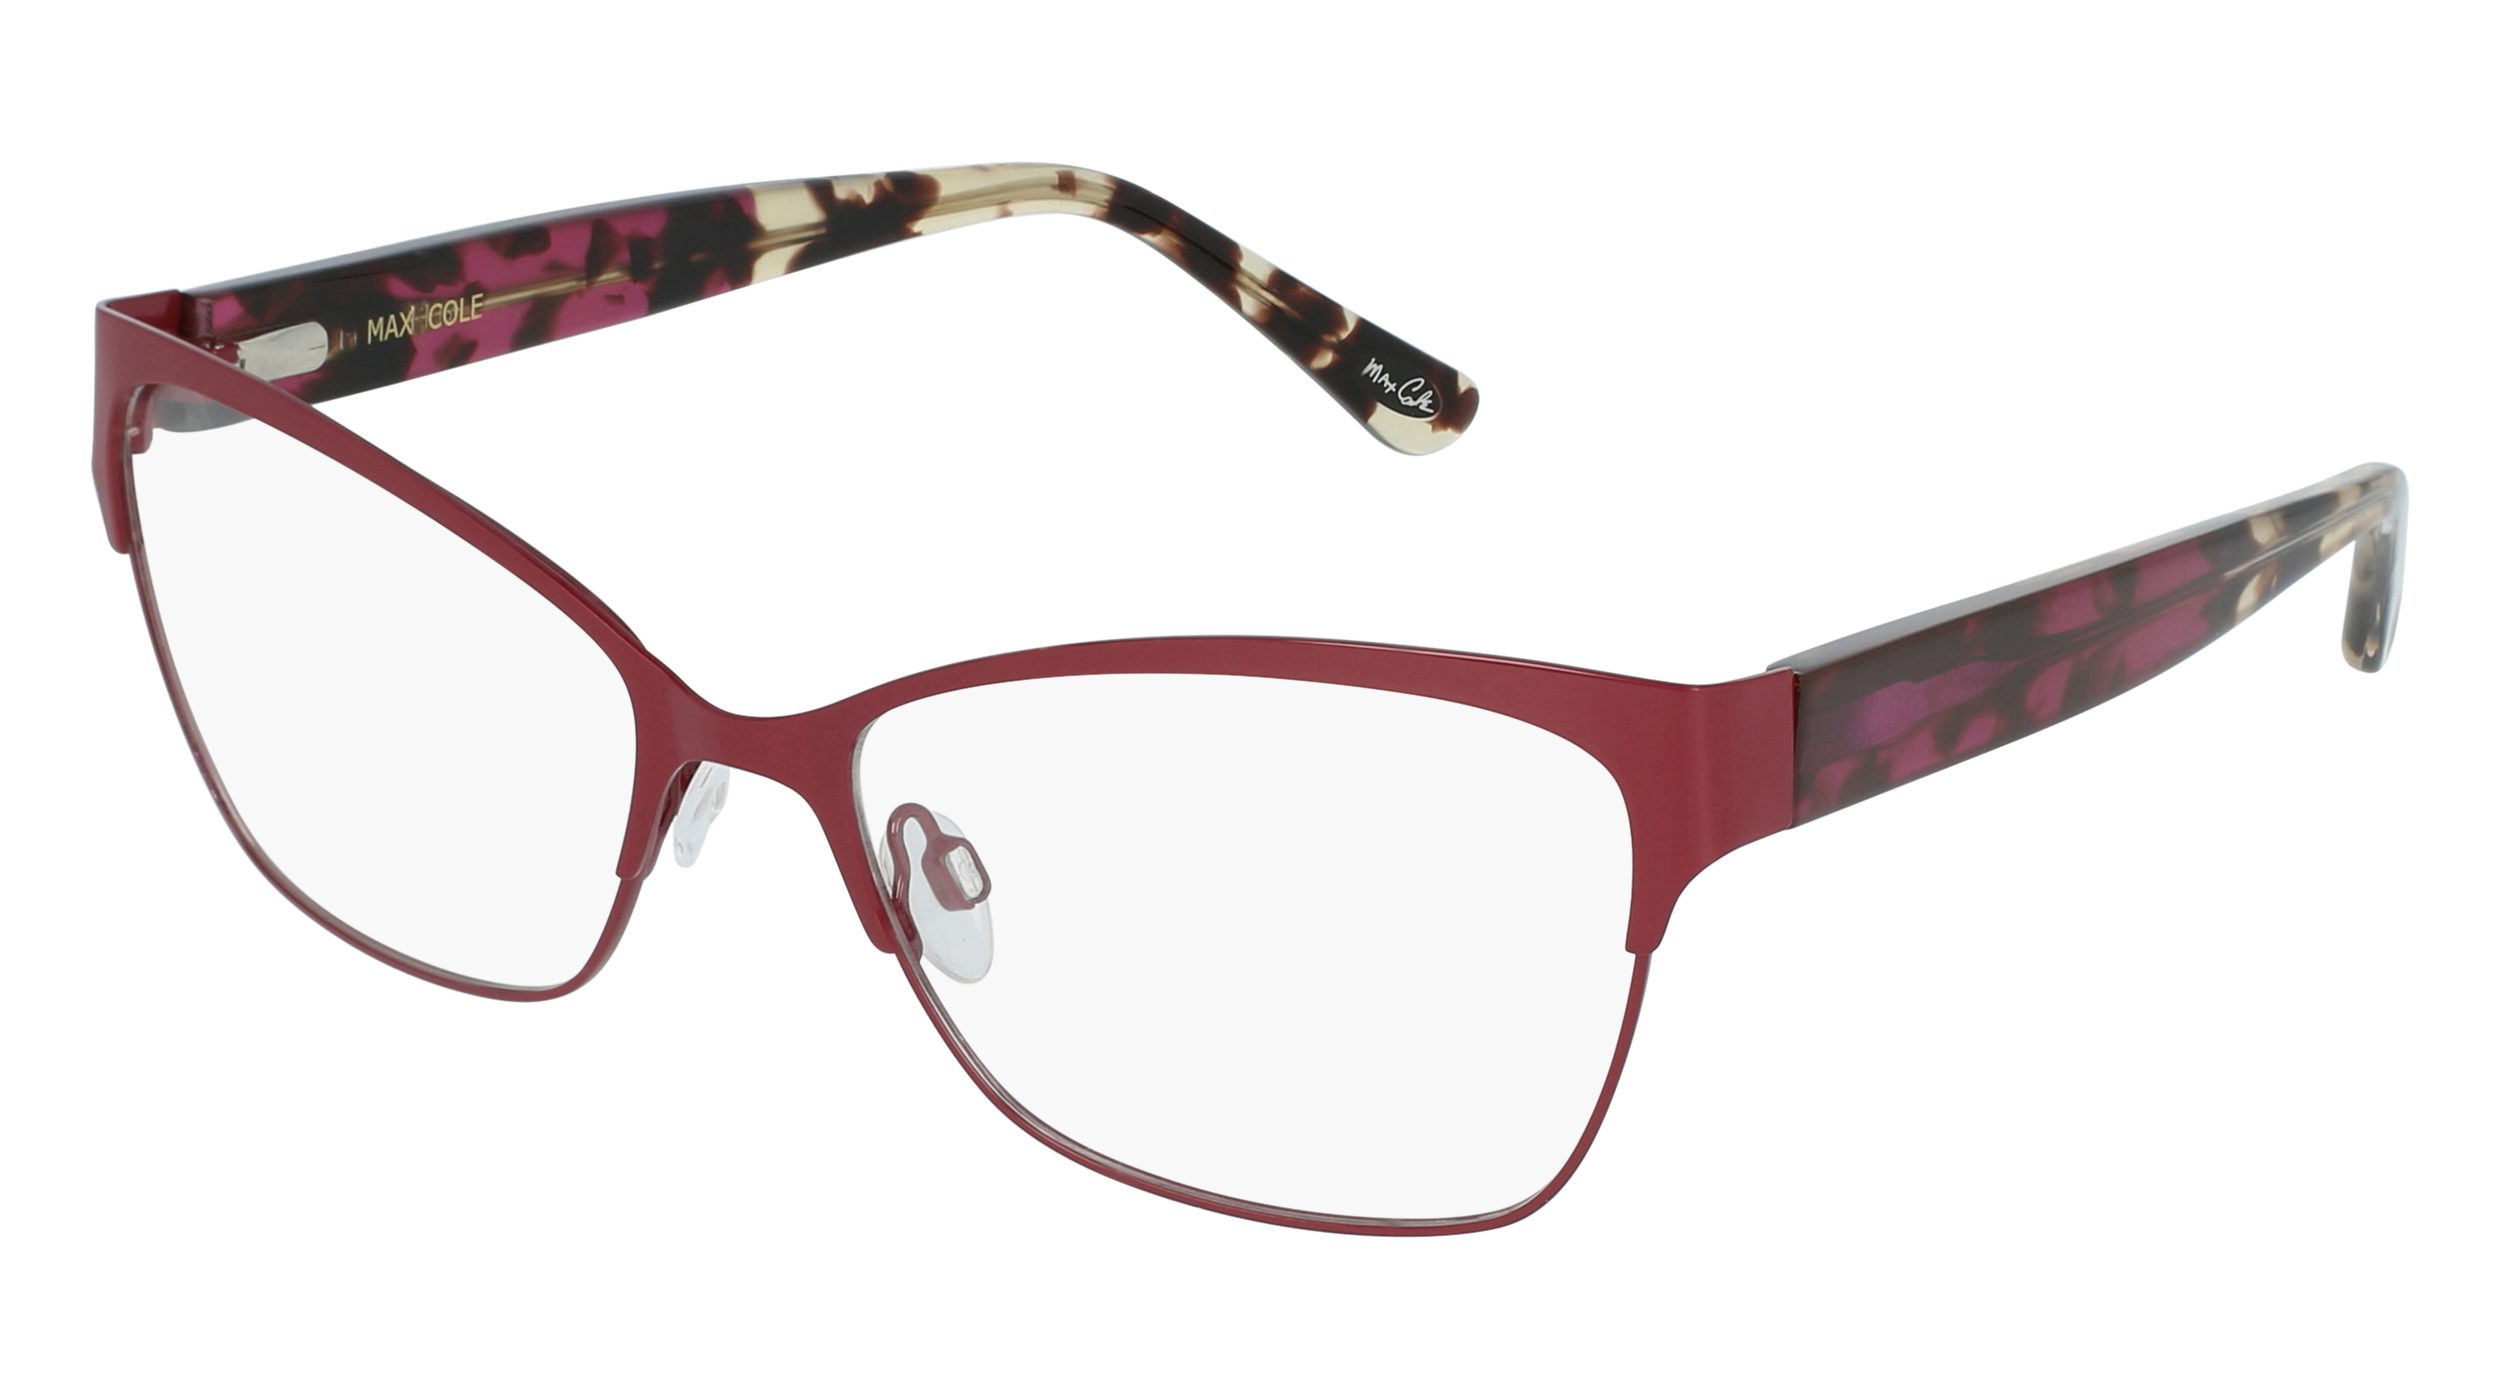 M MC 1514 women's eyeglasses (from the side)